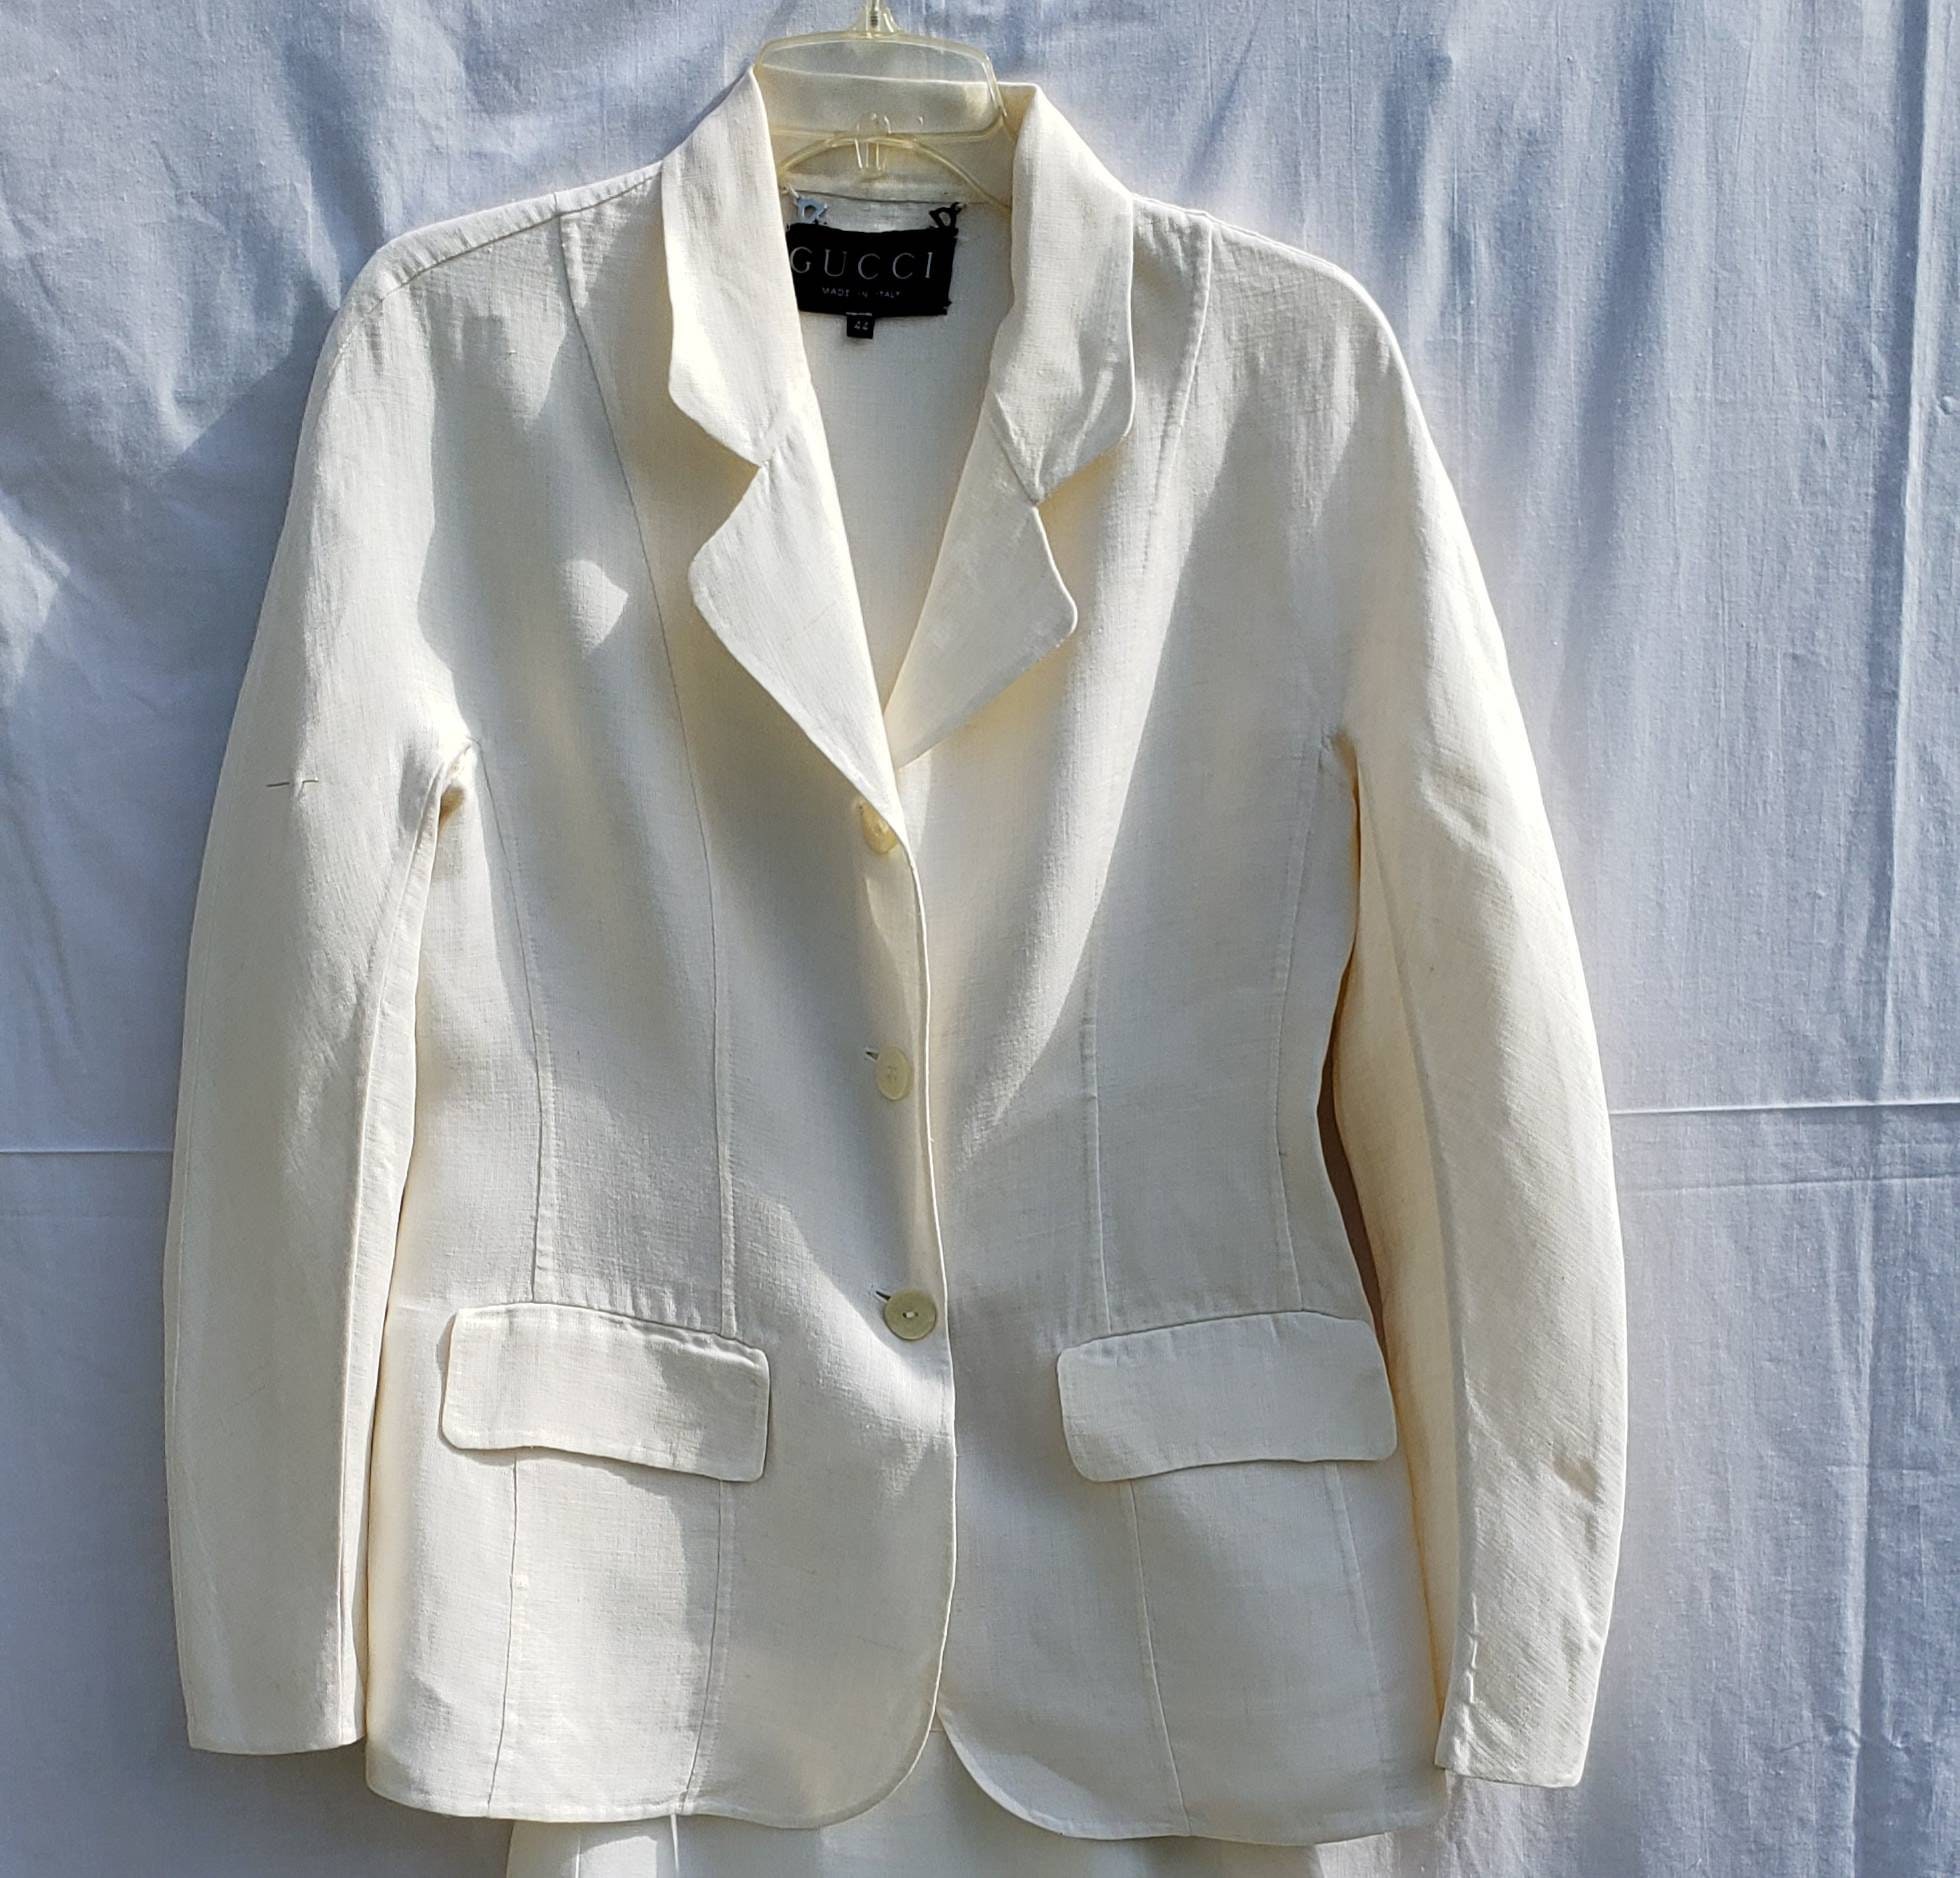 Gucci Skirt Suit Vintage Outfit White Gucci Suit |